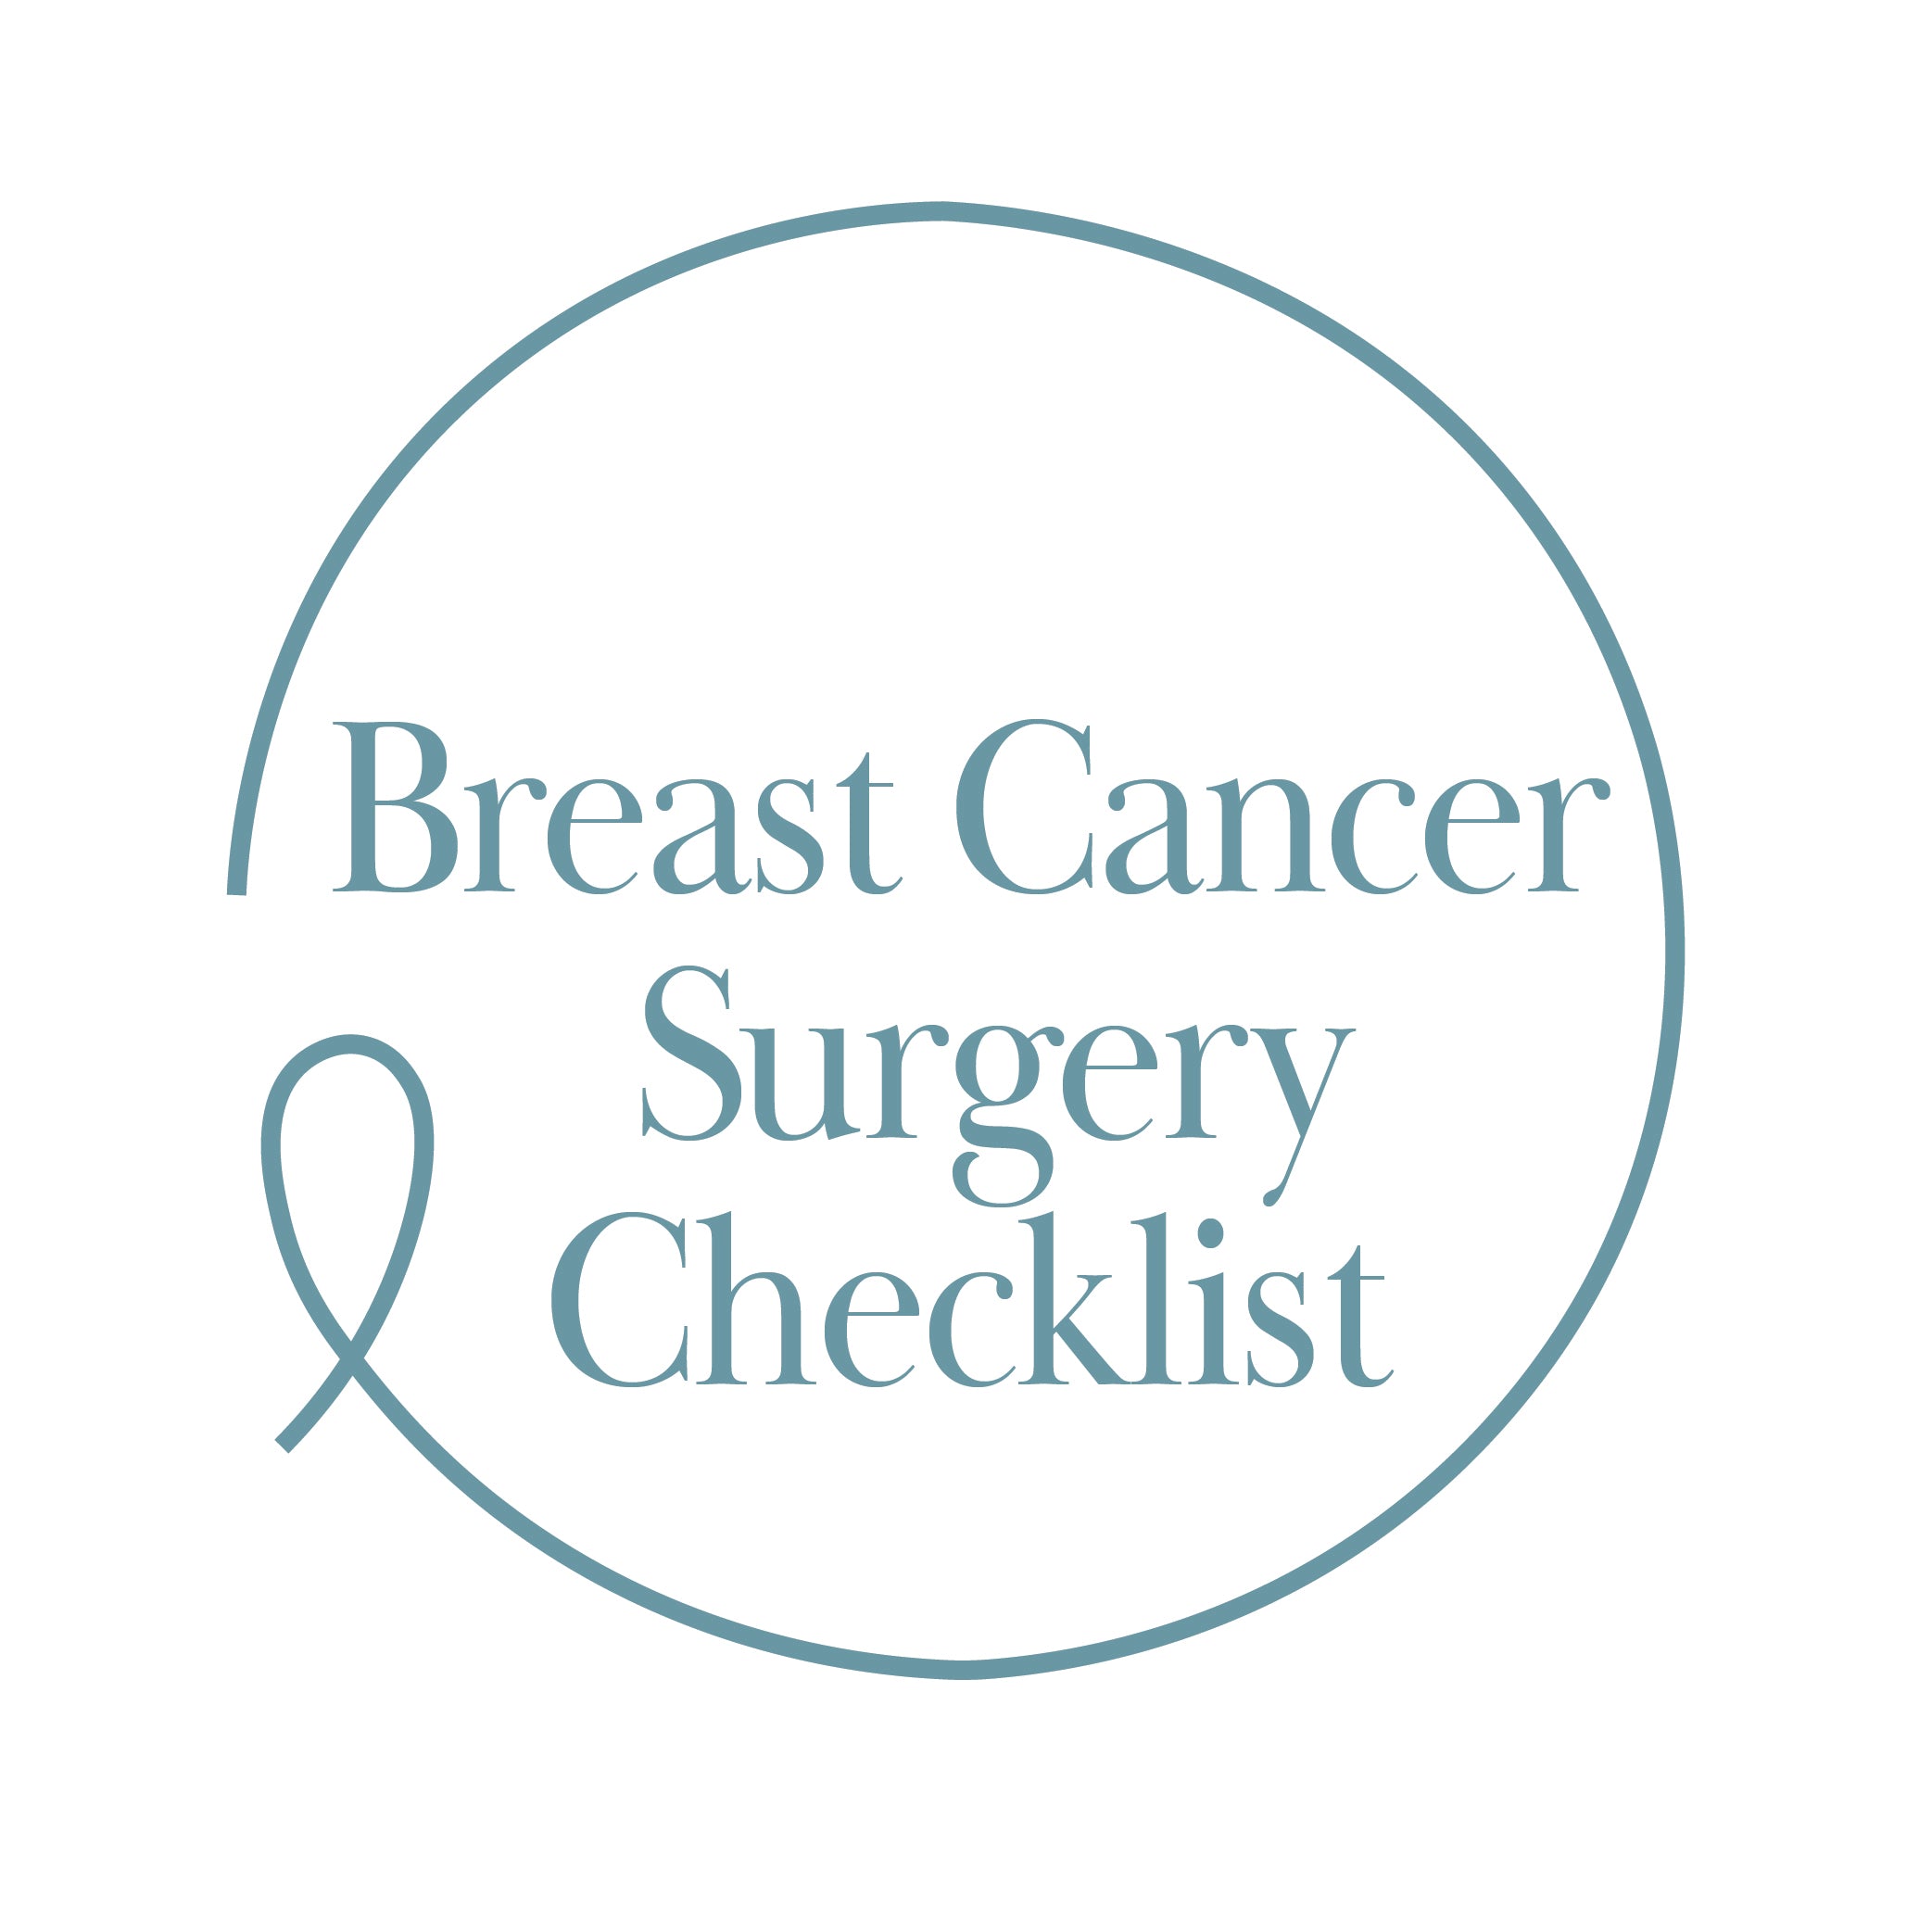 Breast Cancer Surgery Checklist